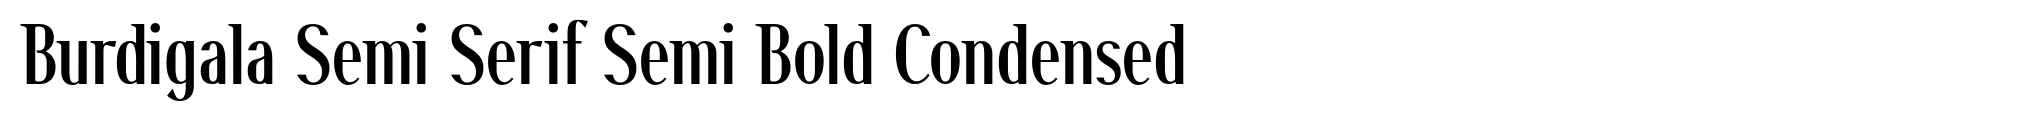 Burdigala Semi Serif Semi Bold Condensed image